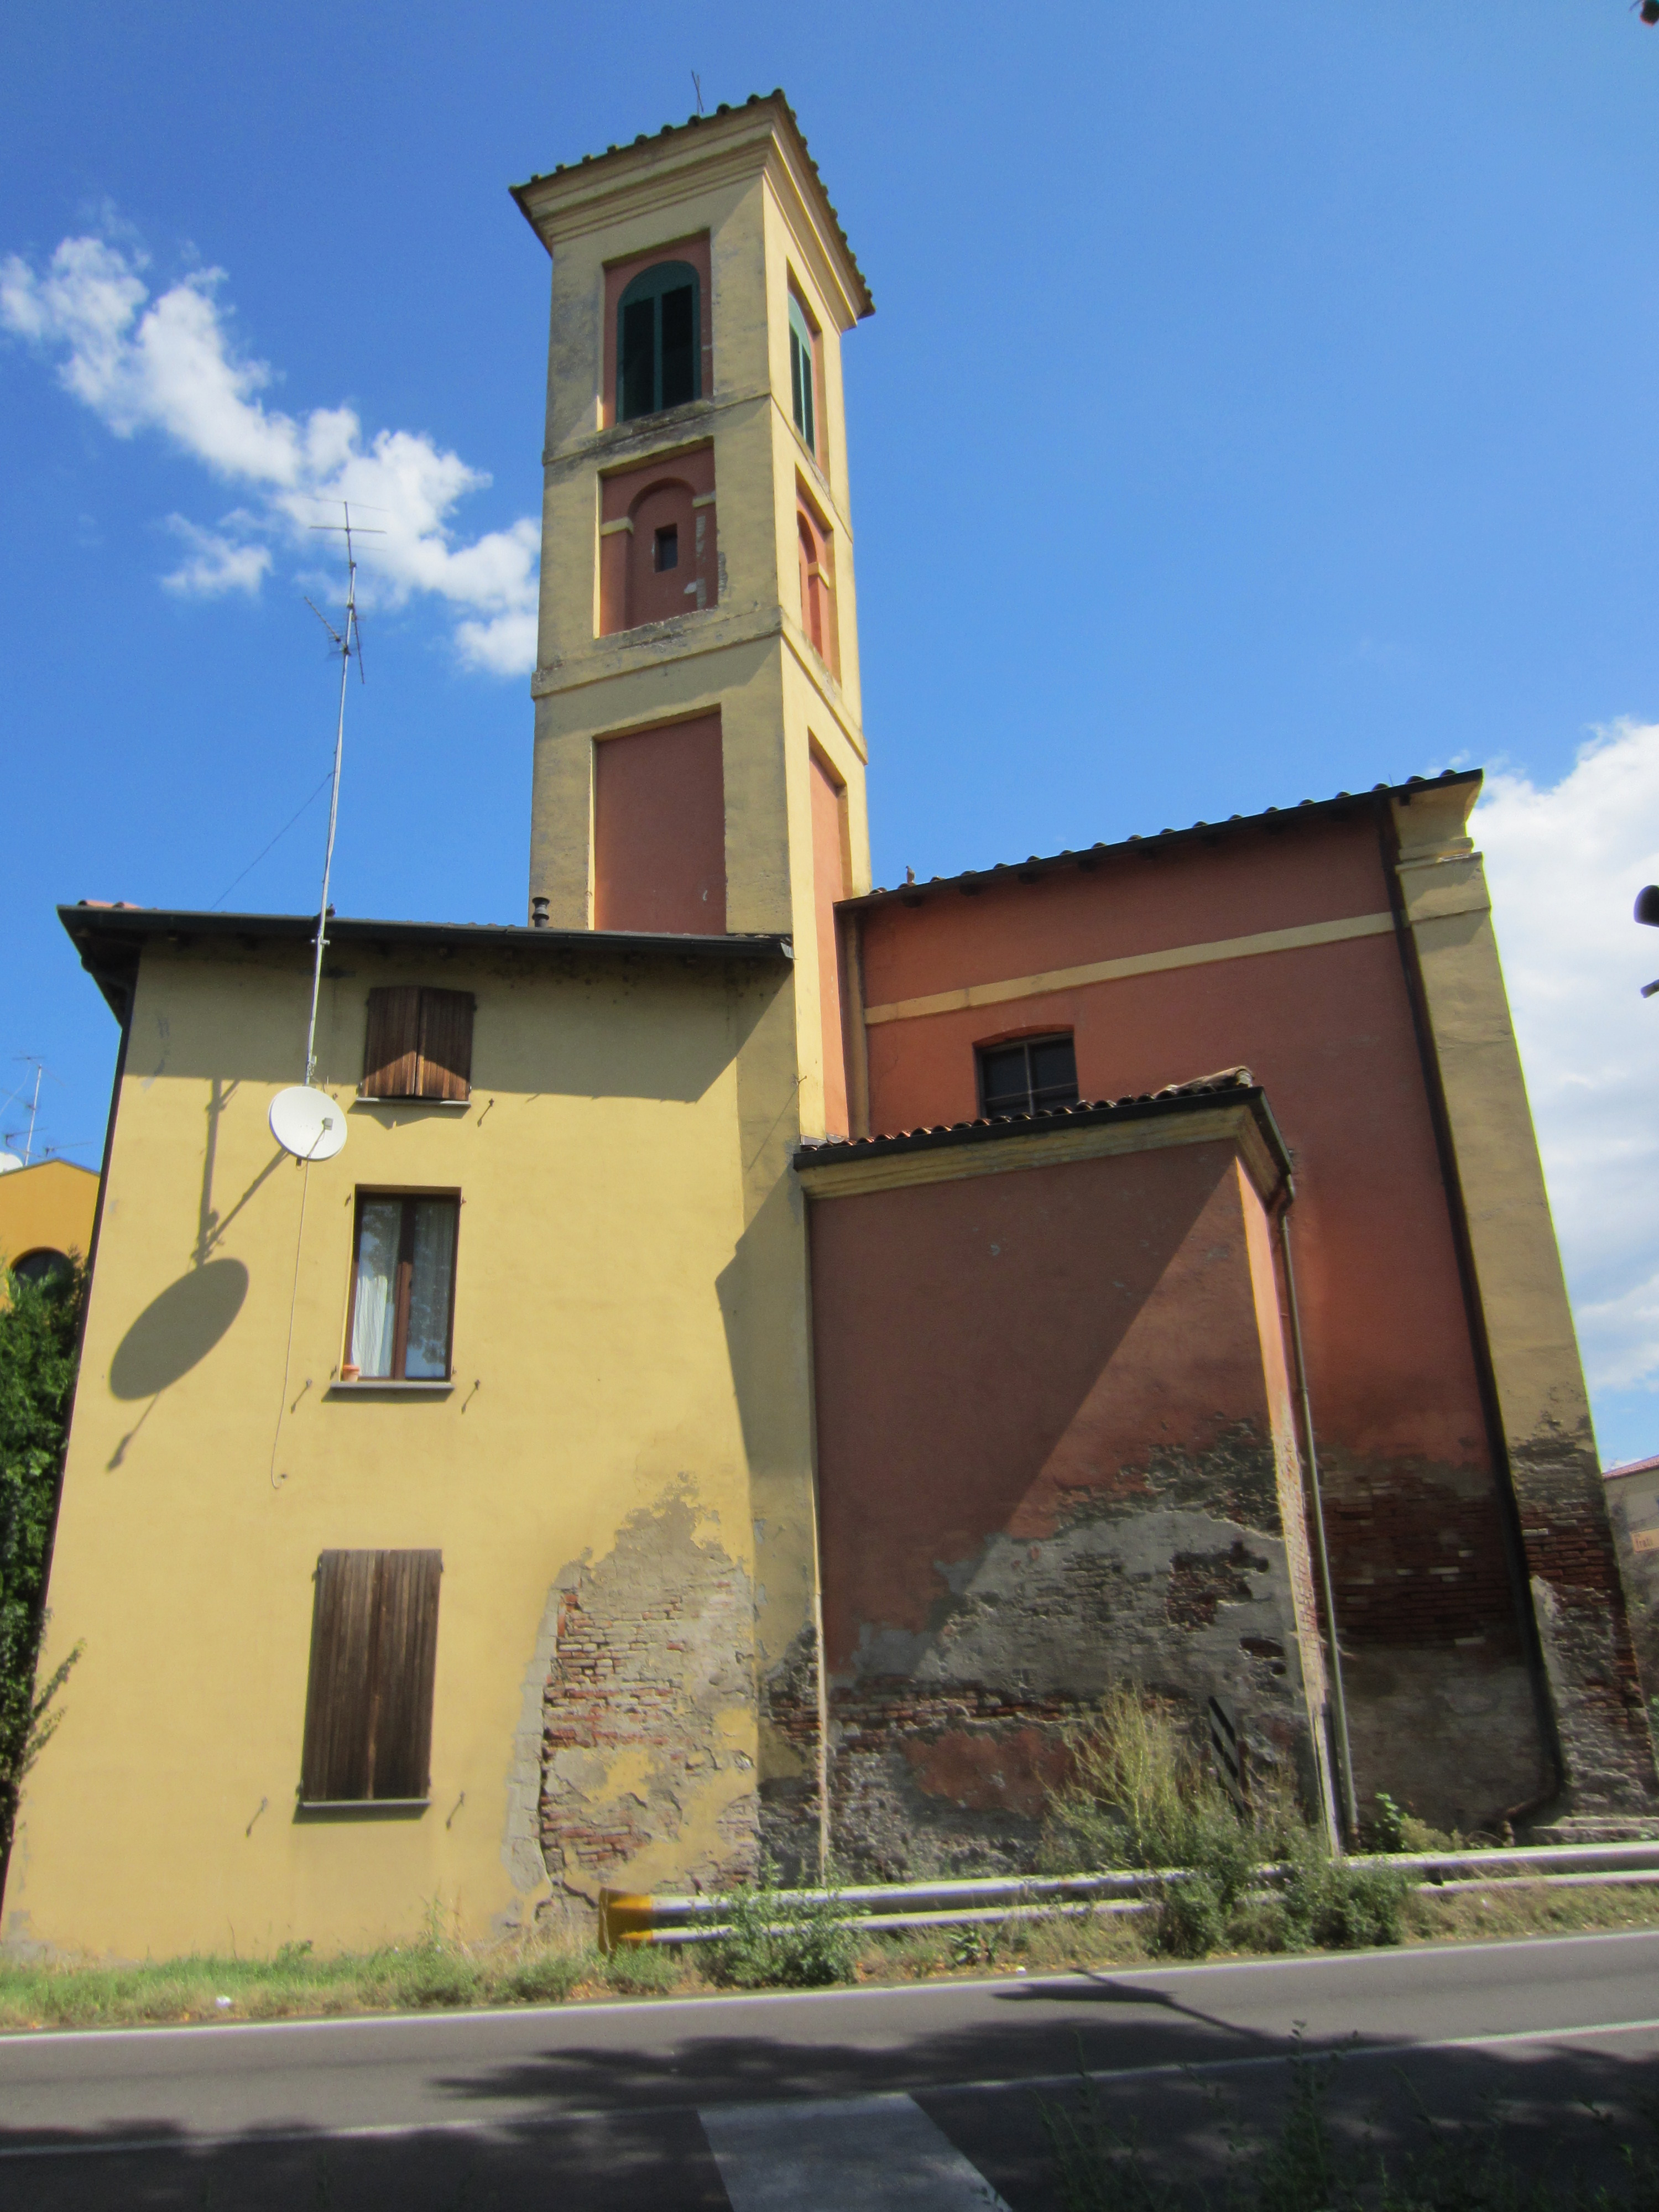 Chiesa di S. Maria in Strada (chiesa) - Sant'Agata Bolognese (BO) 